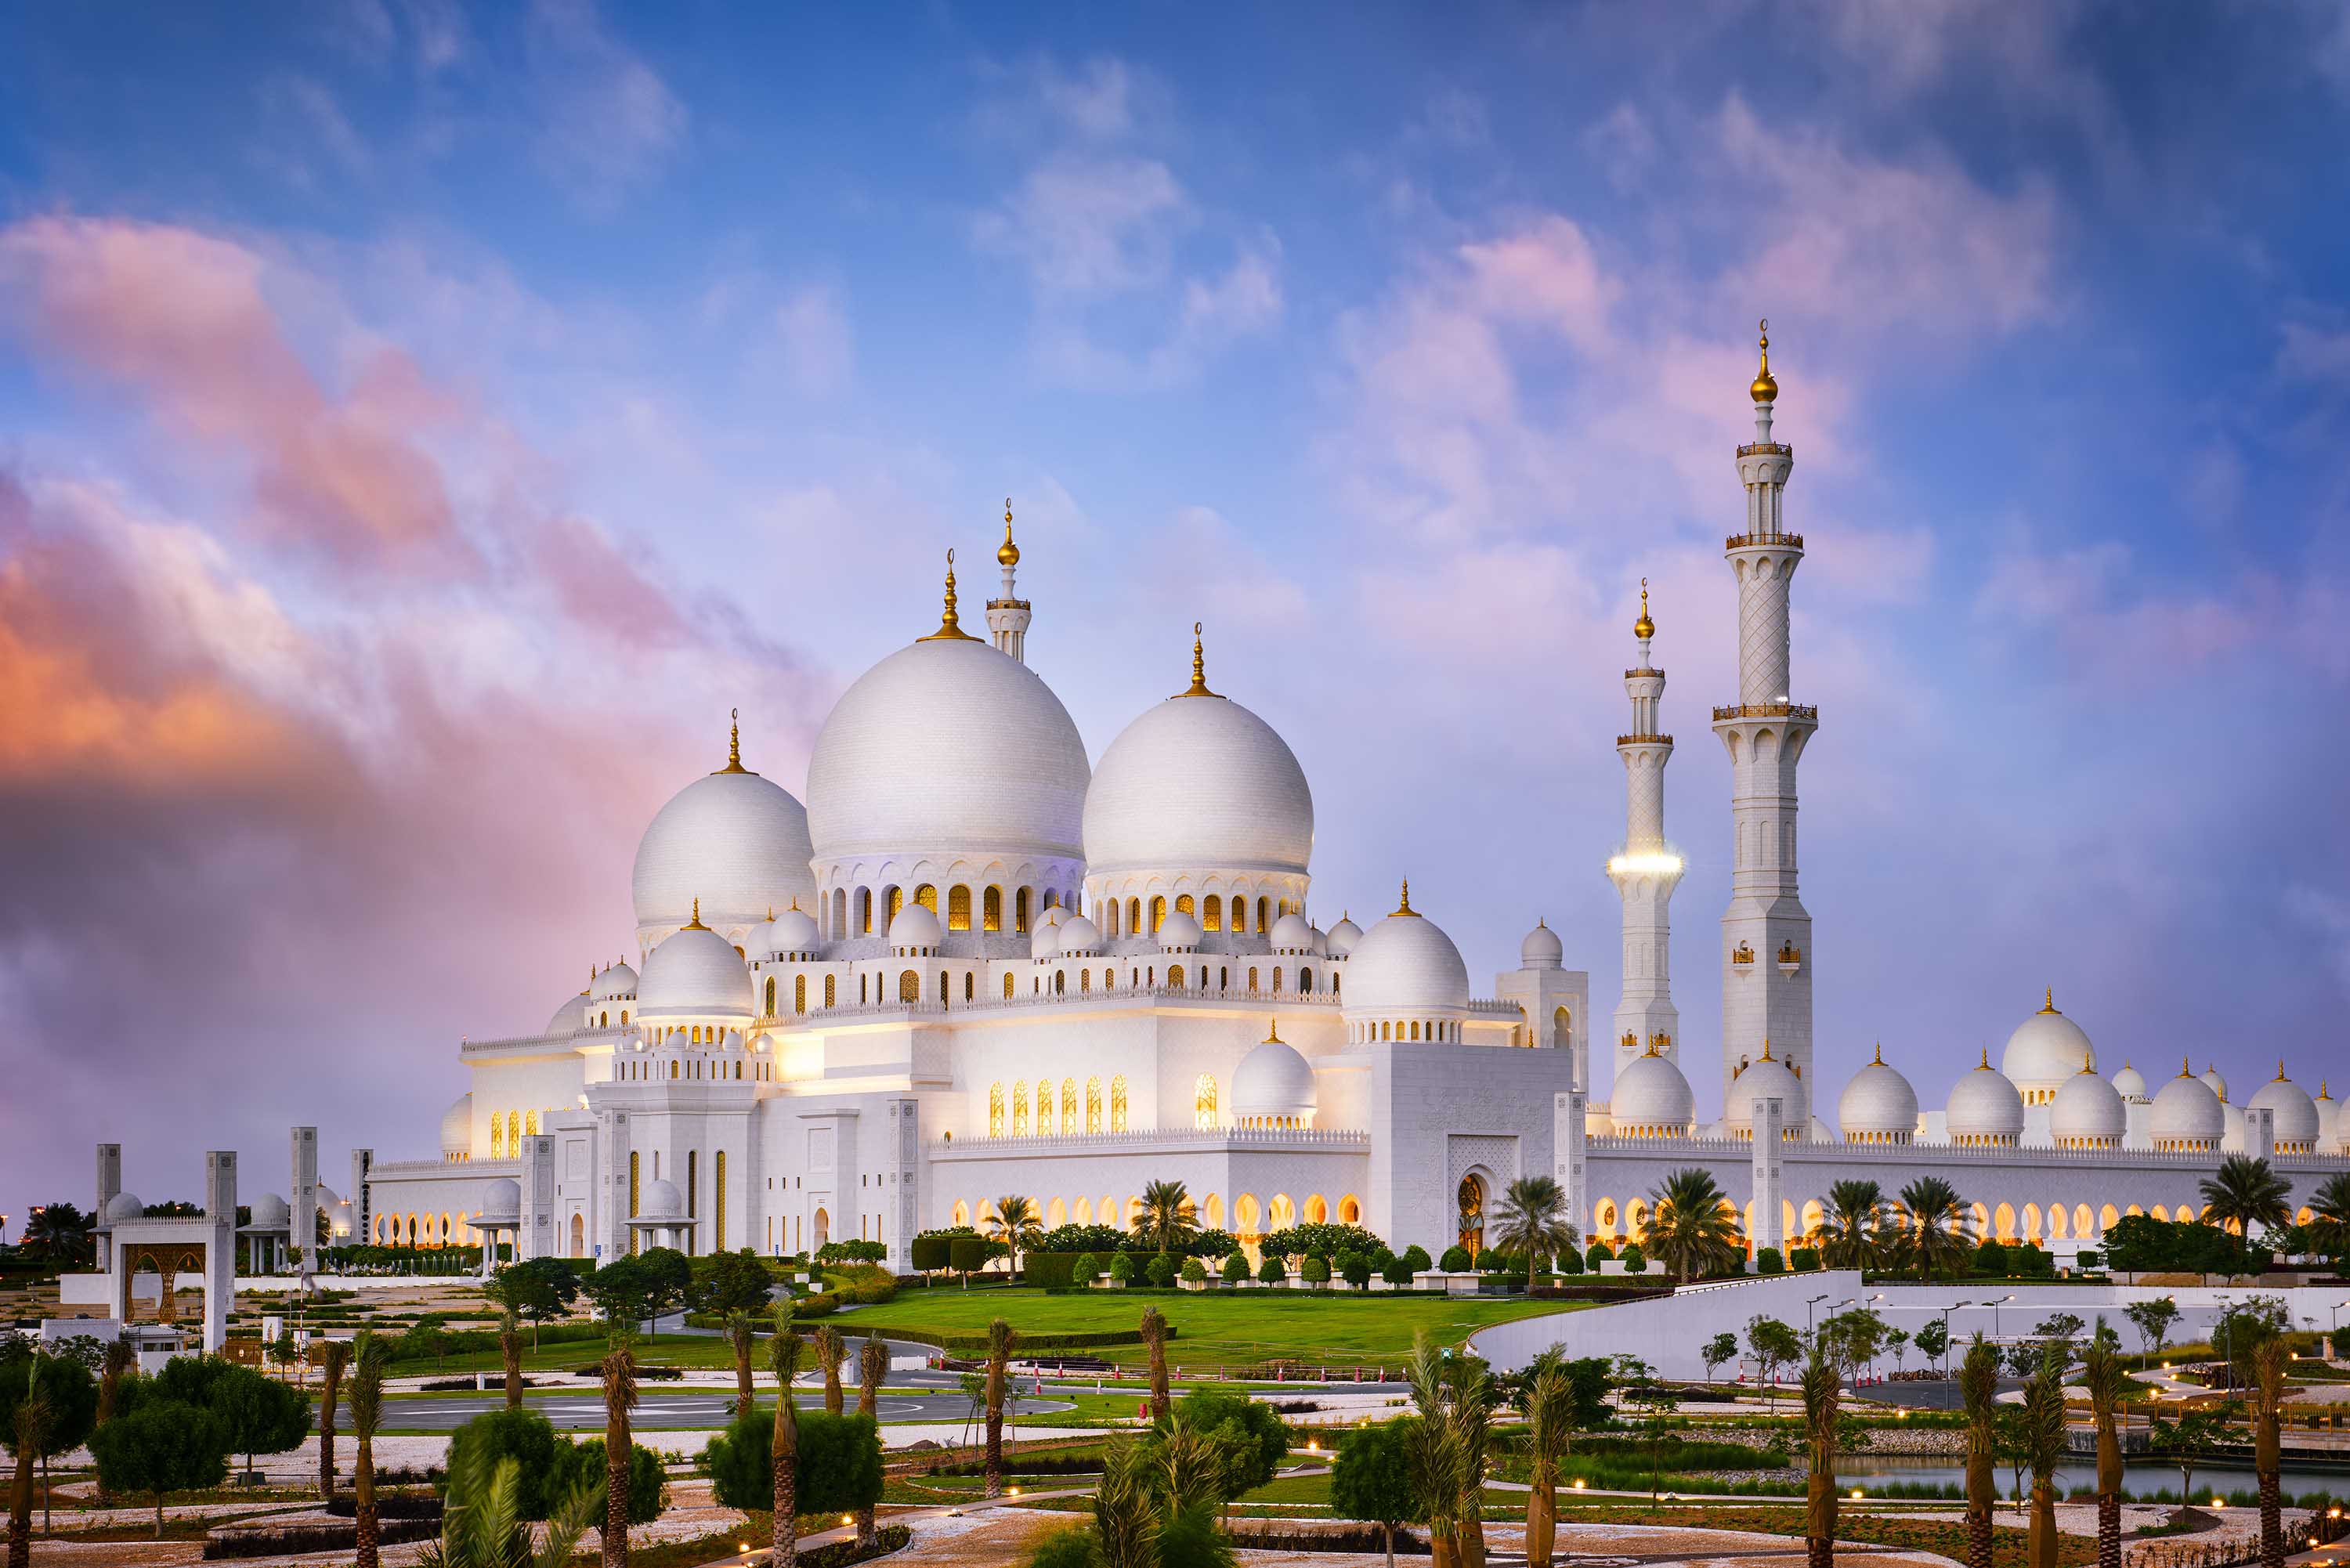 Sheikh Zayed Grand Mosque in Abu Dhabi: Learn its secrets | CNN Travel